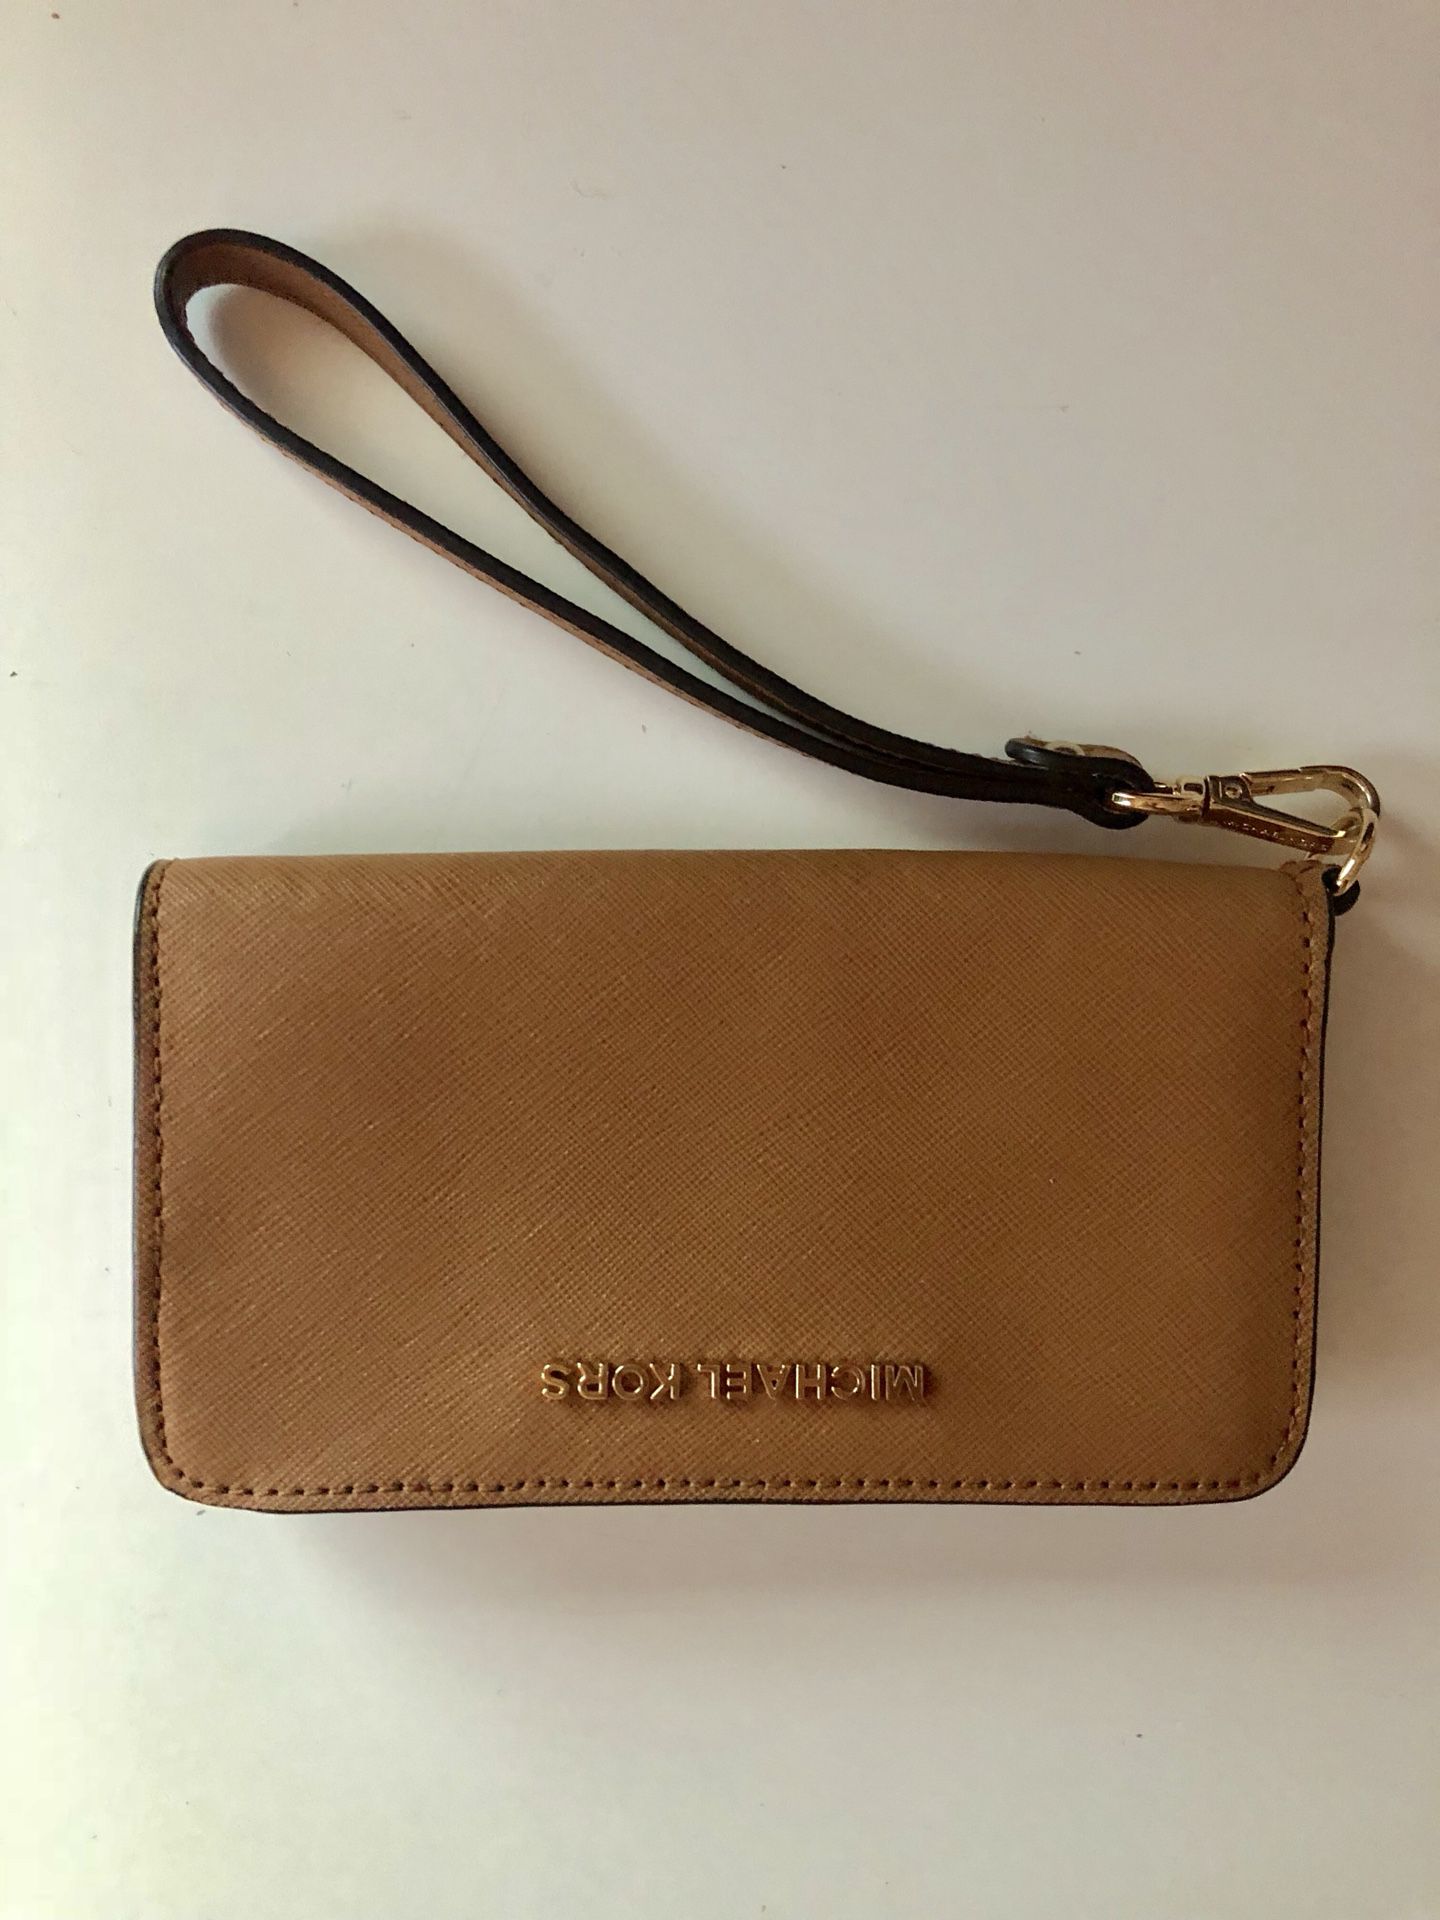 Michael Kors Mercer leather wristlet phone wallet